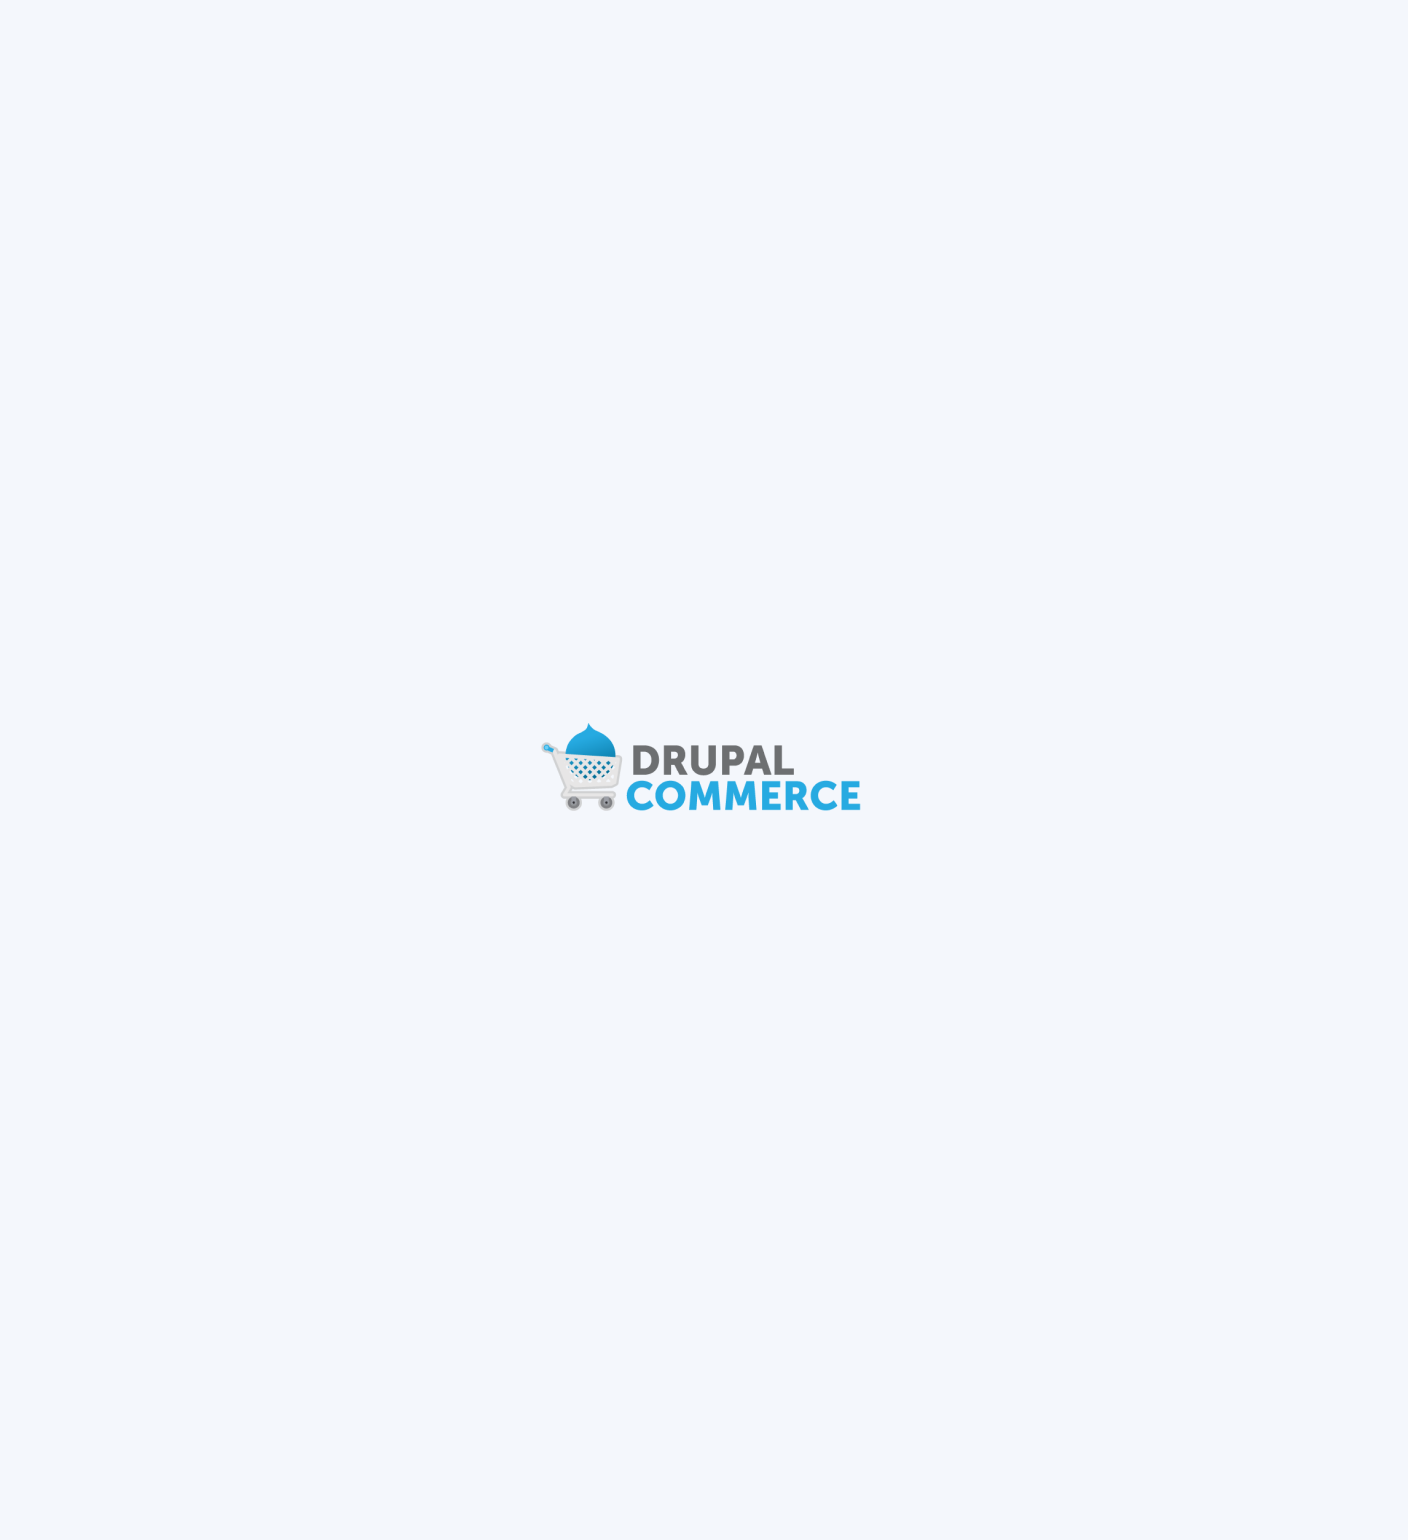 Drupal-Commerce